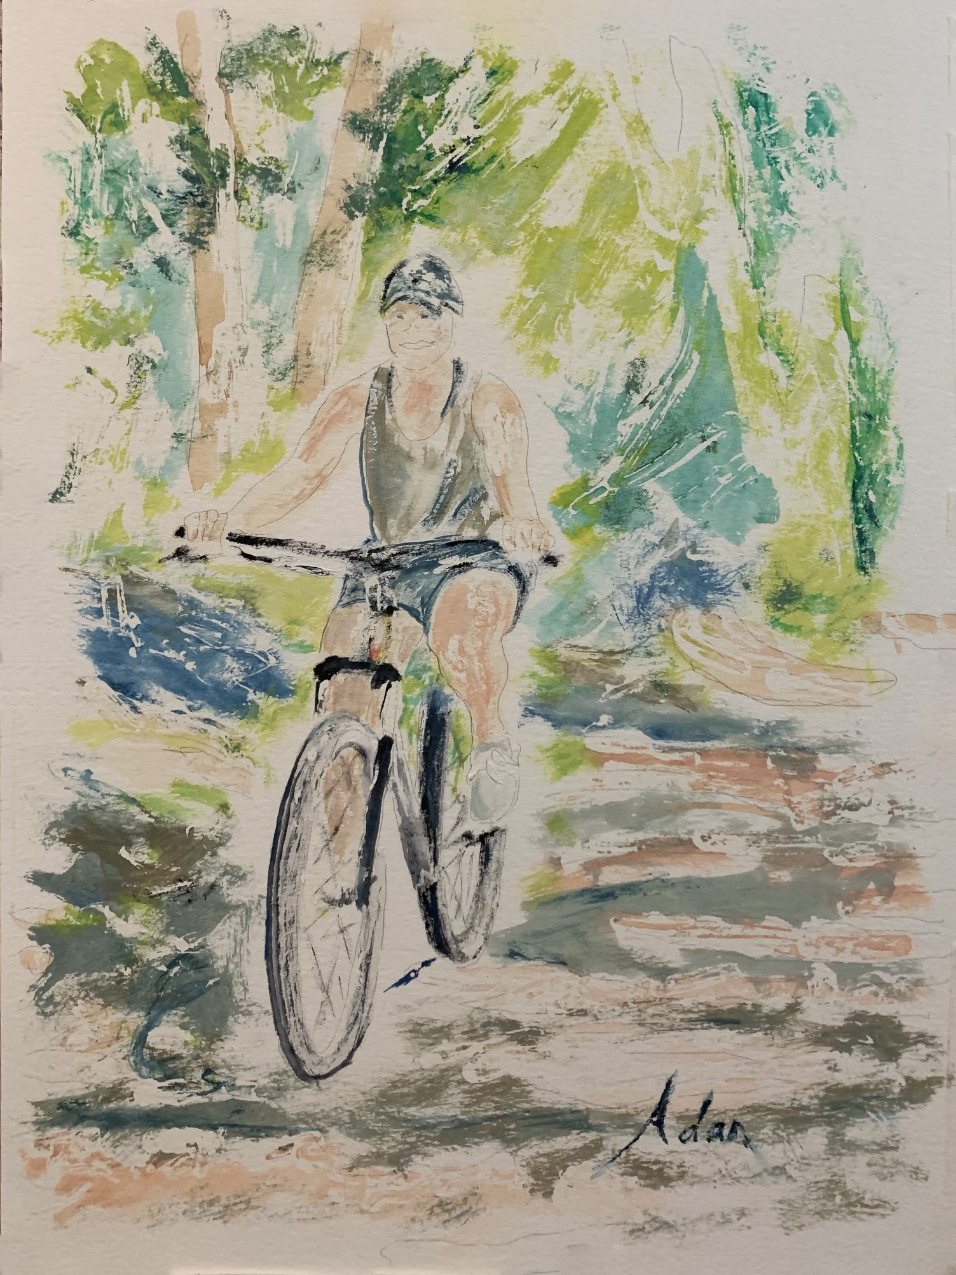 Girl on a Bicycle Study 1 v2 ©Felipe Adan Lerma, watercolor on paper 9x12 Oct 2021 https://felipeadan-lerma.pixels.com/featured/girl-on-a-bicycle-study-1-v2-felipe-adan-lerma.html